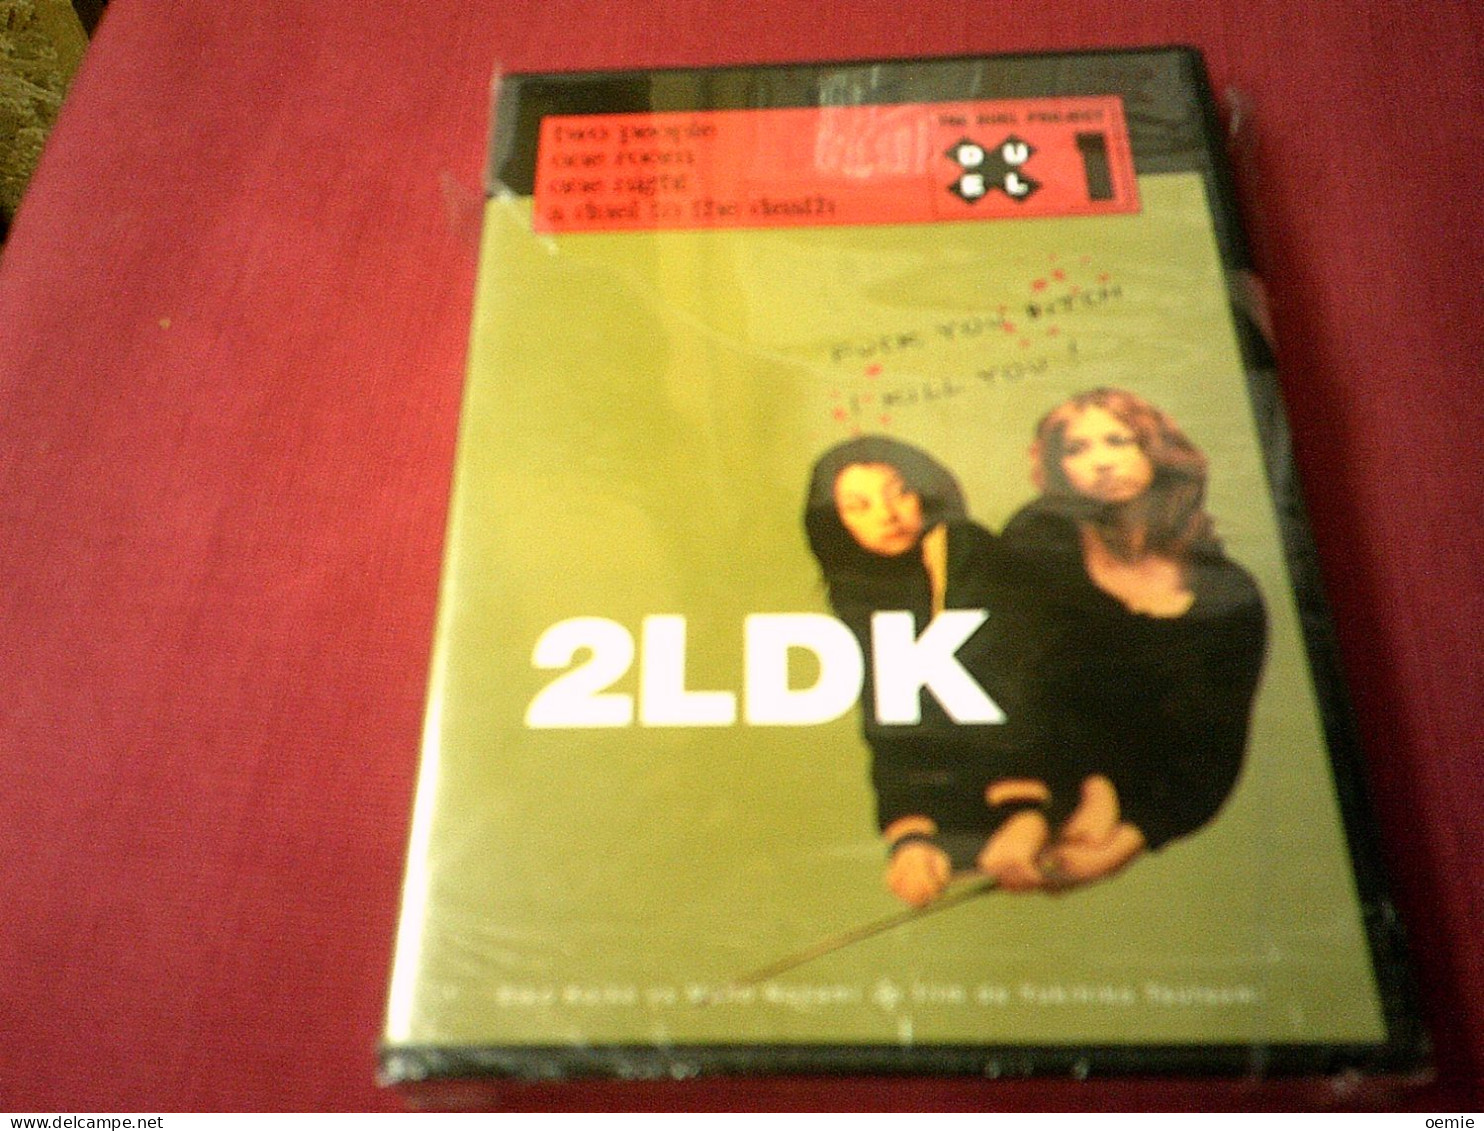 2LDK  FILM DE YUKIHIKO TSUTSUMI - Horreur